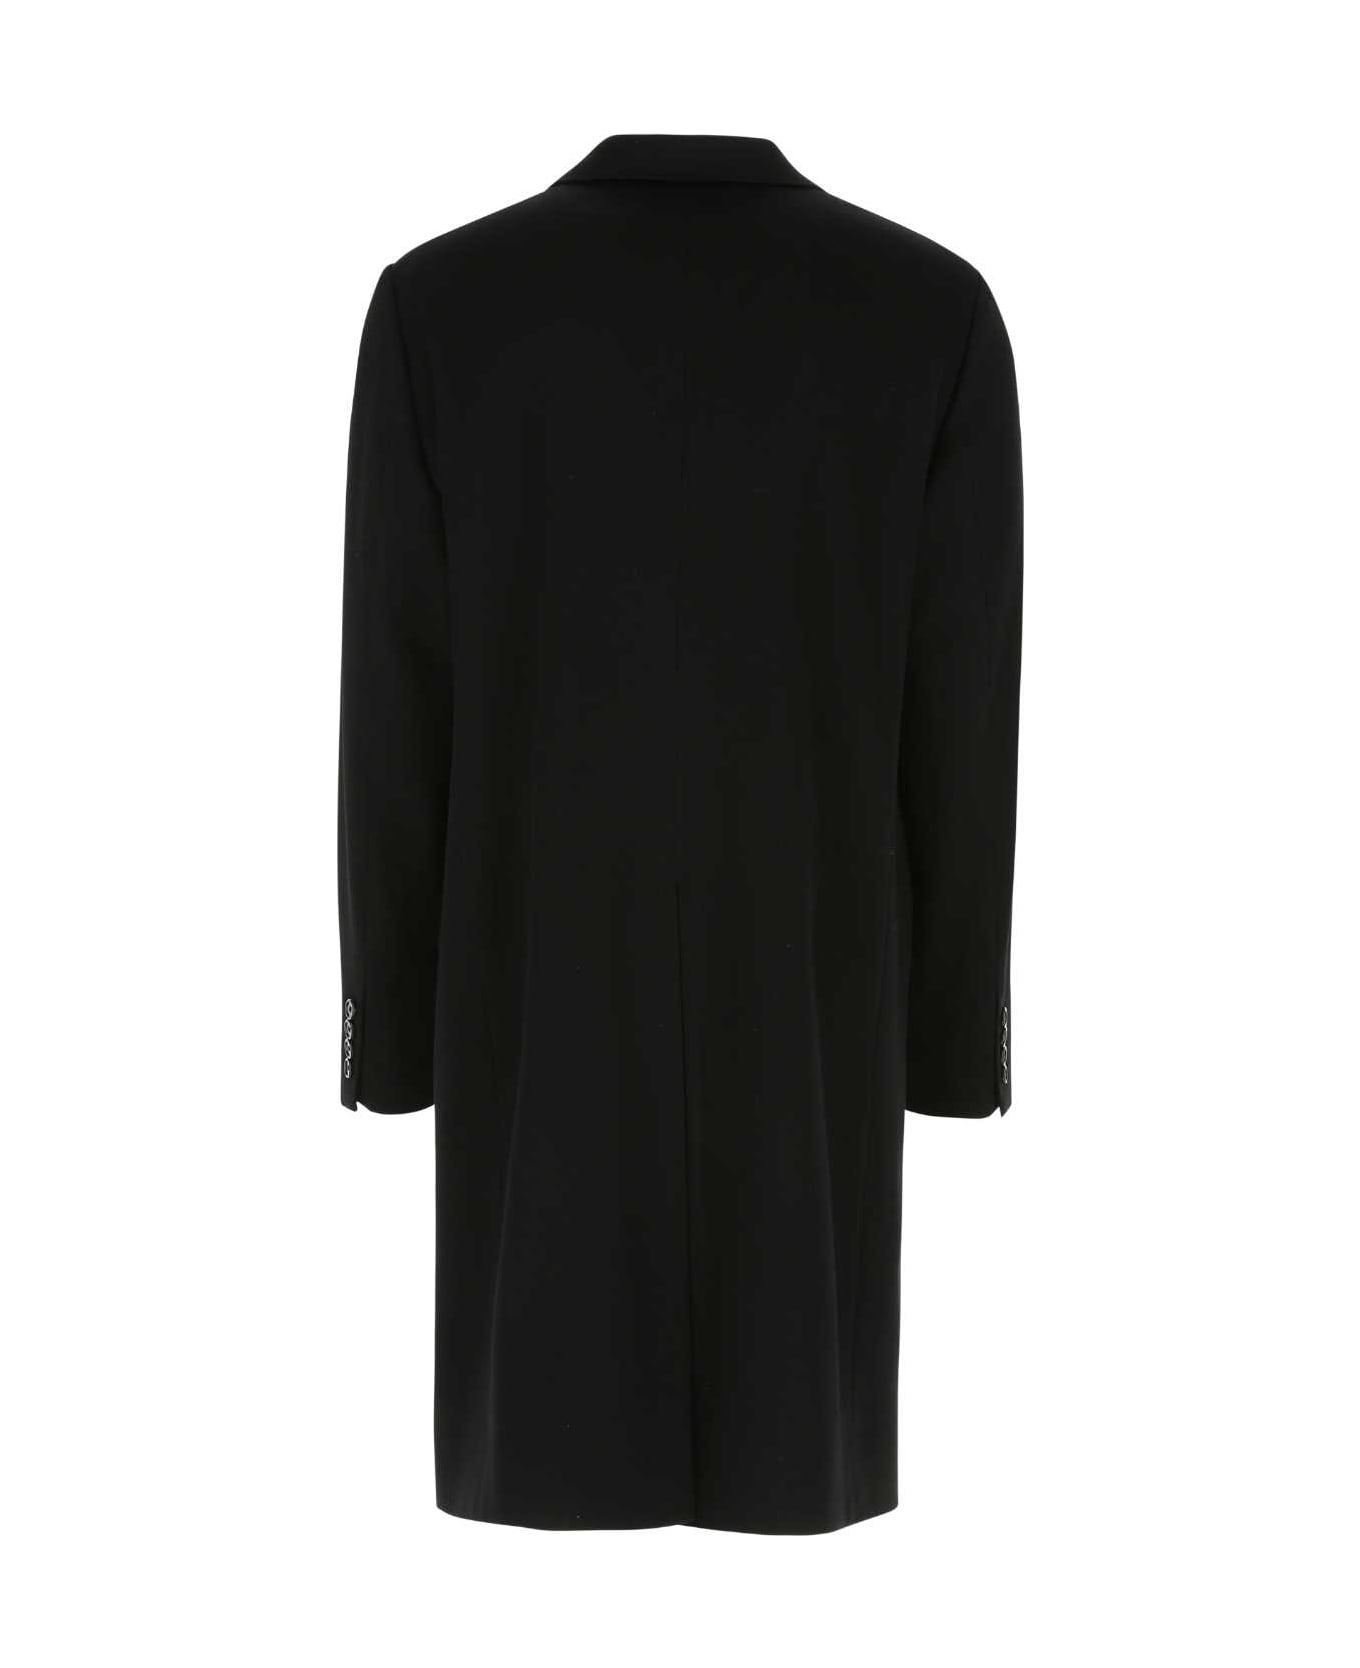 Dolce & Gabbana Black Wool Coat - N0000 レインコート